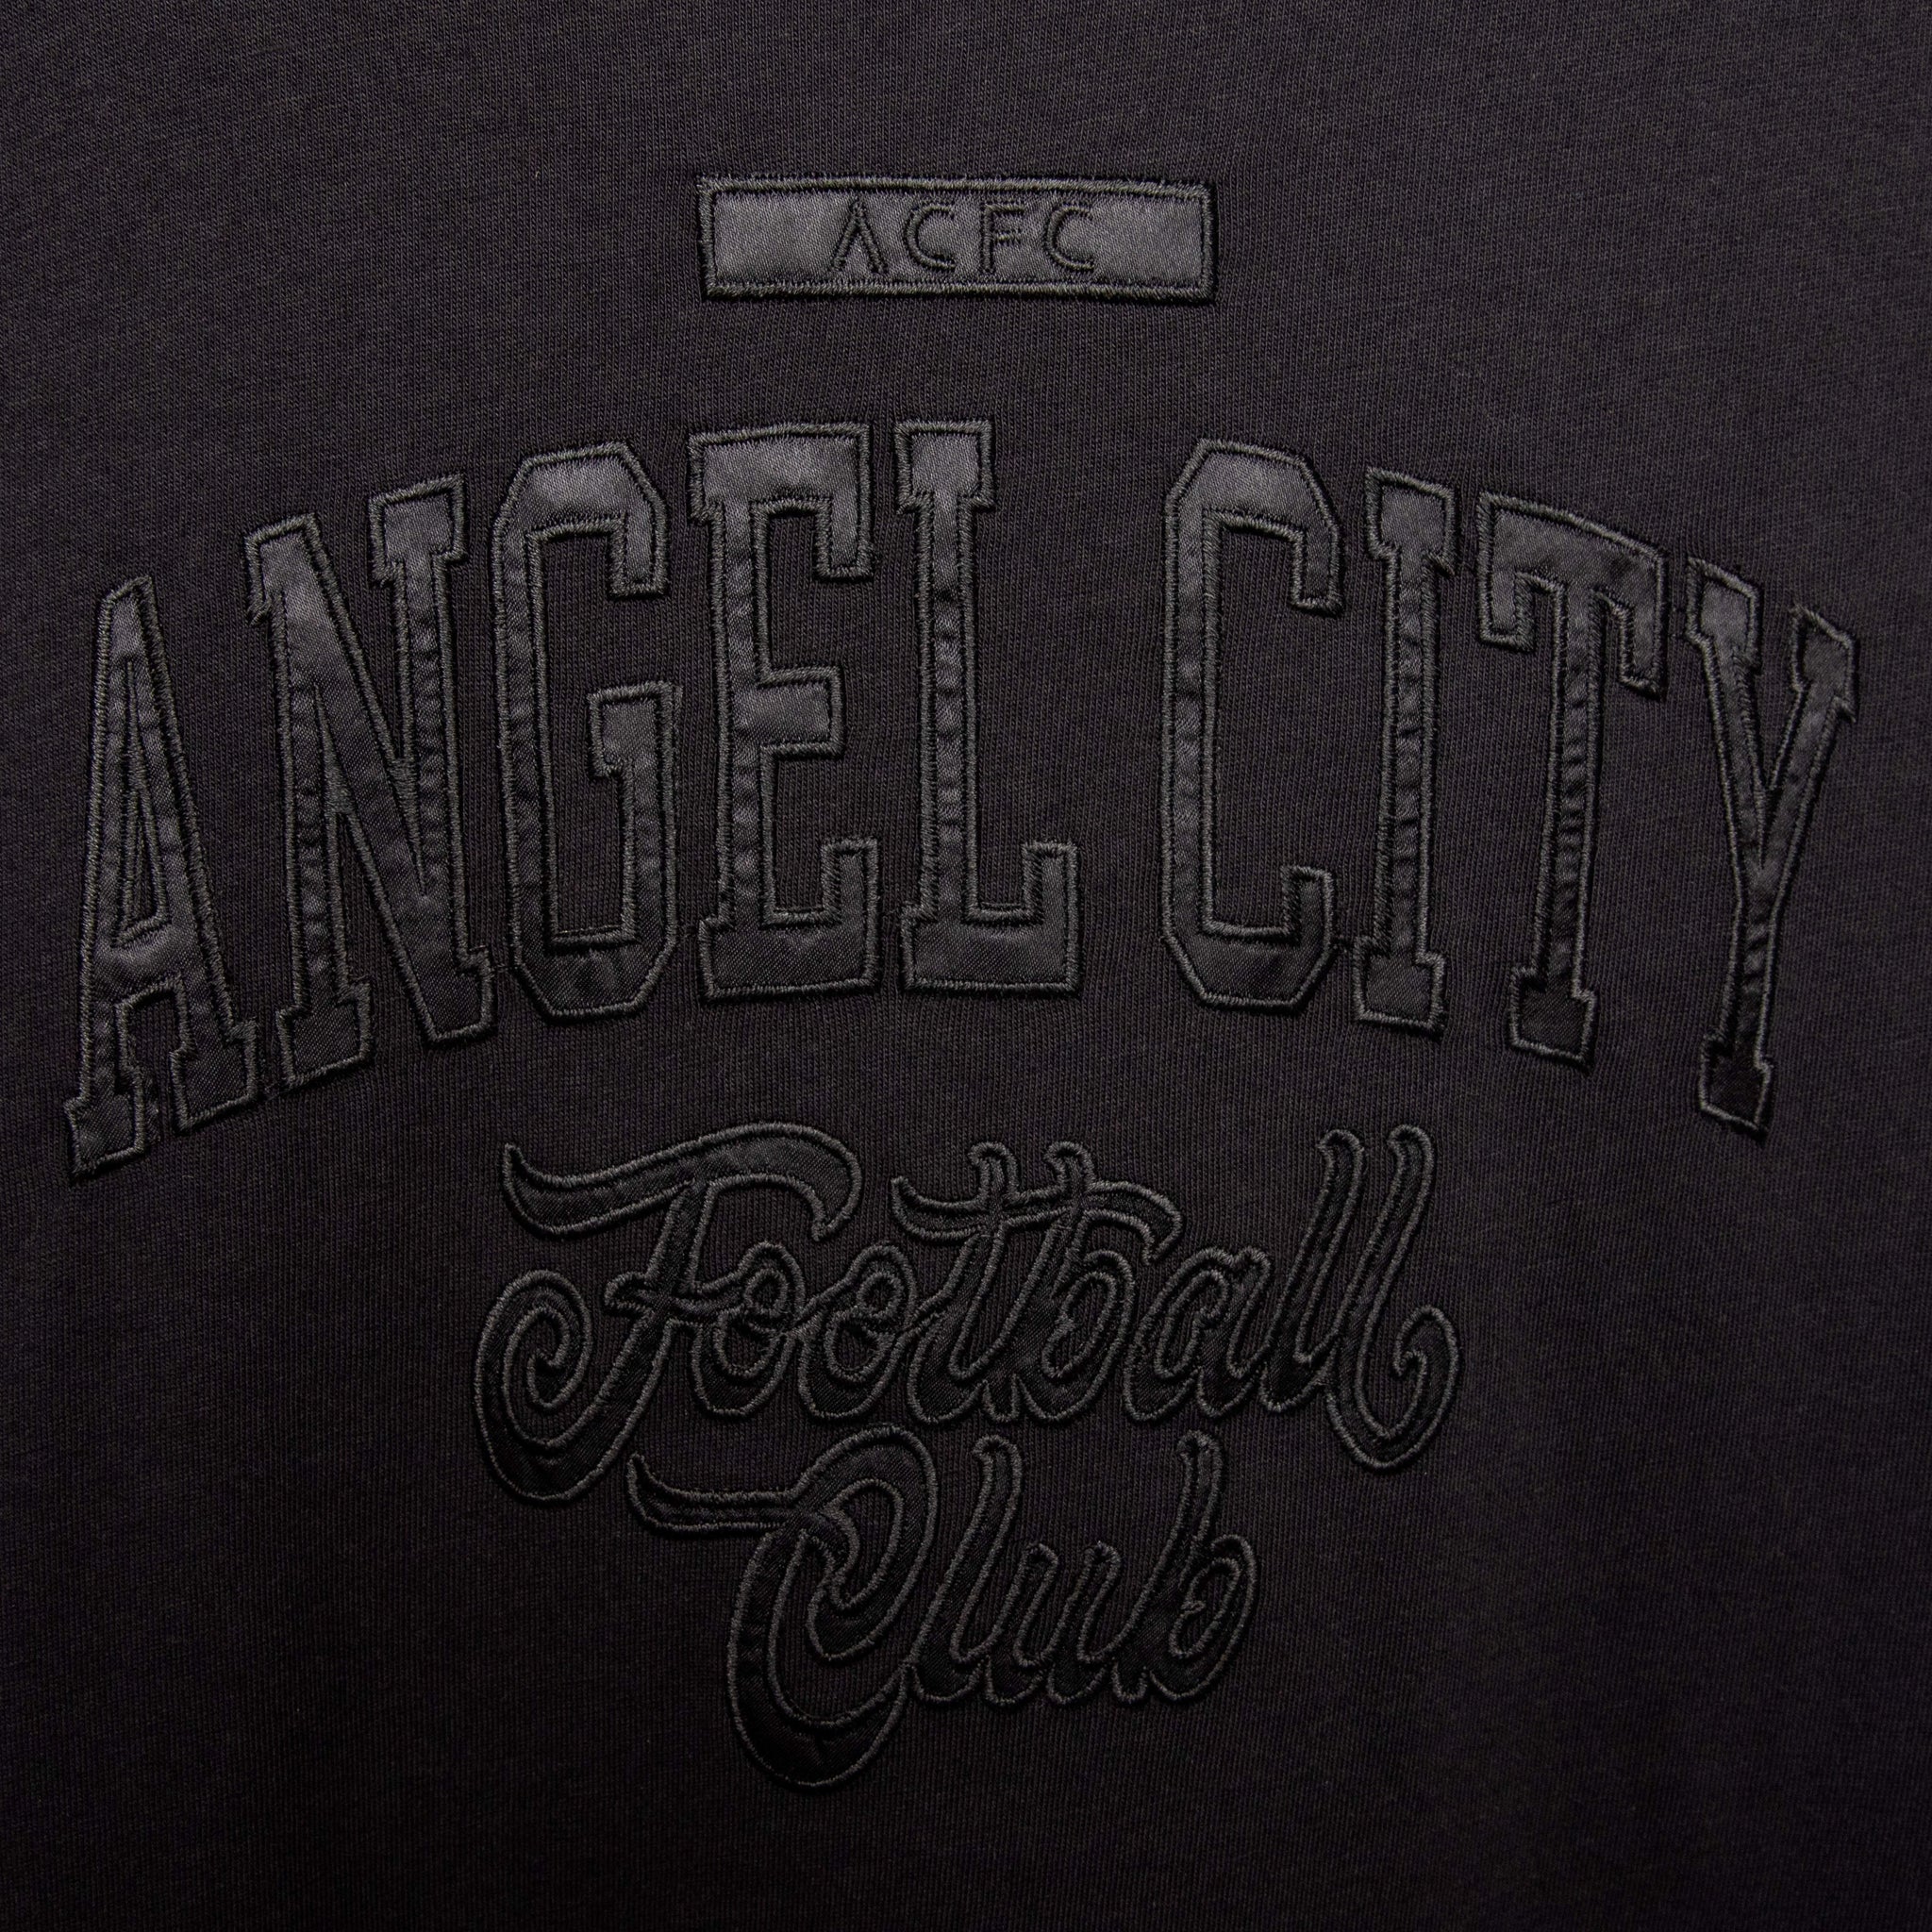 Angel City FC Wild Collective Camiseta de manga corta con apliques de satén negro para mujer